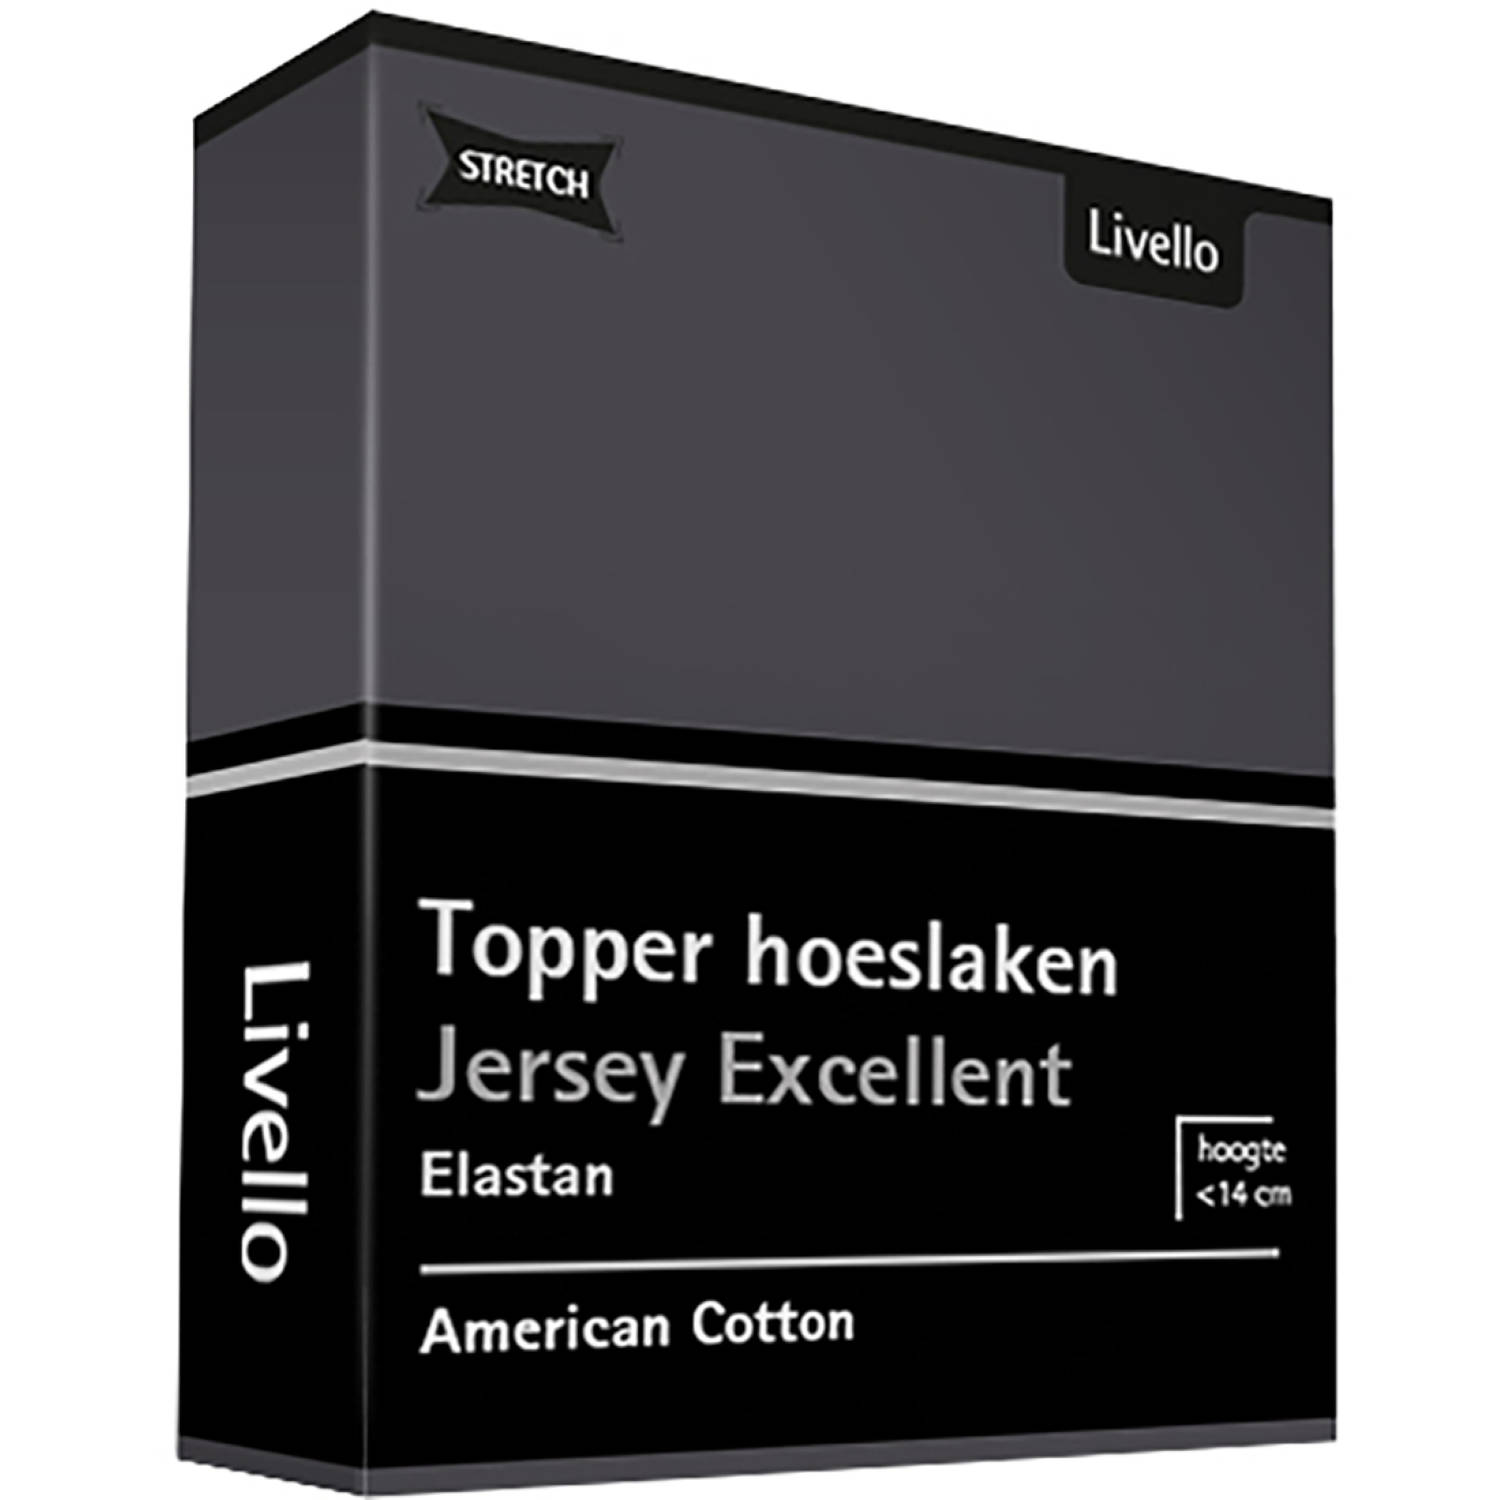 Livello Hoeslaken Topper Jersey Excellent Dark Grey 180 x 200 cm